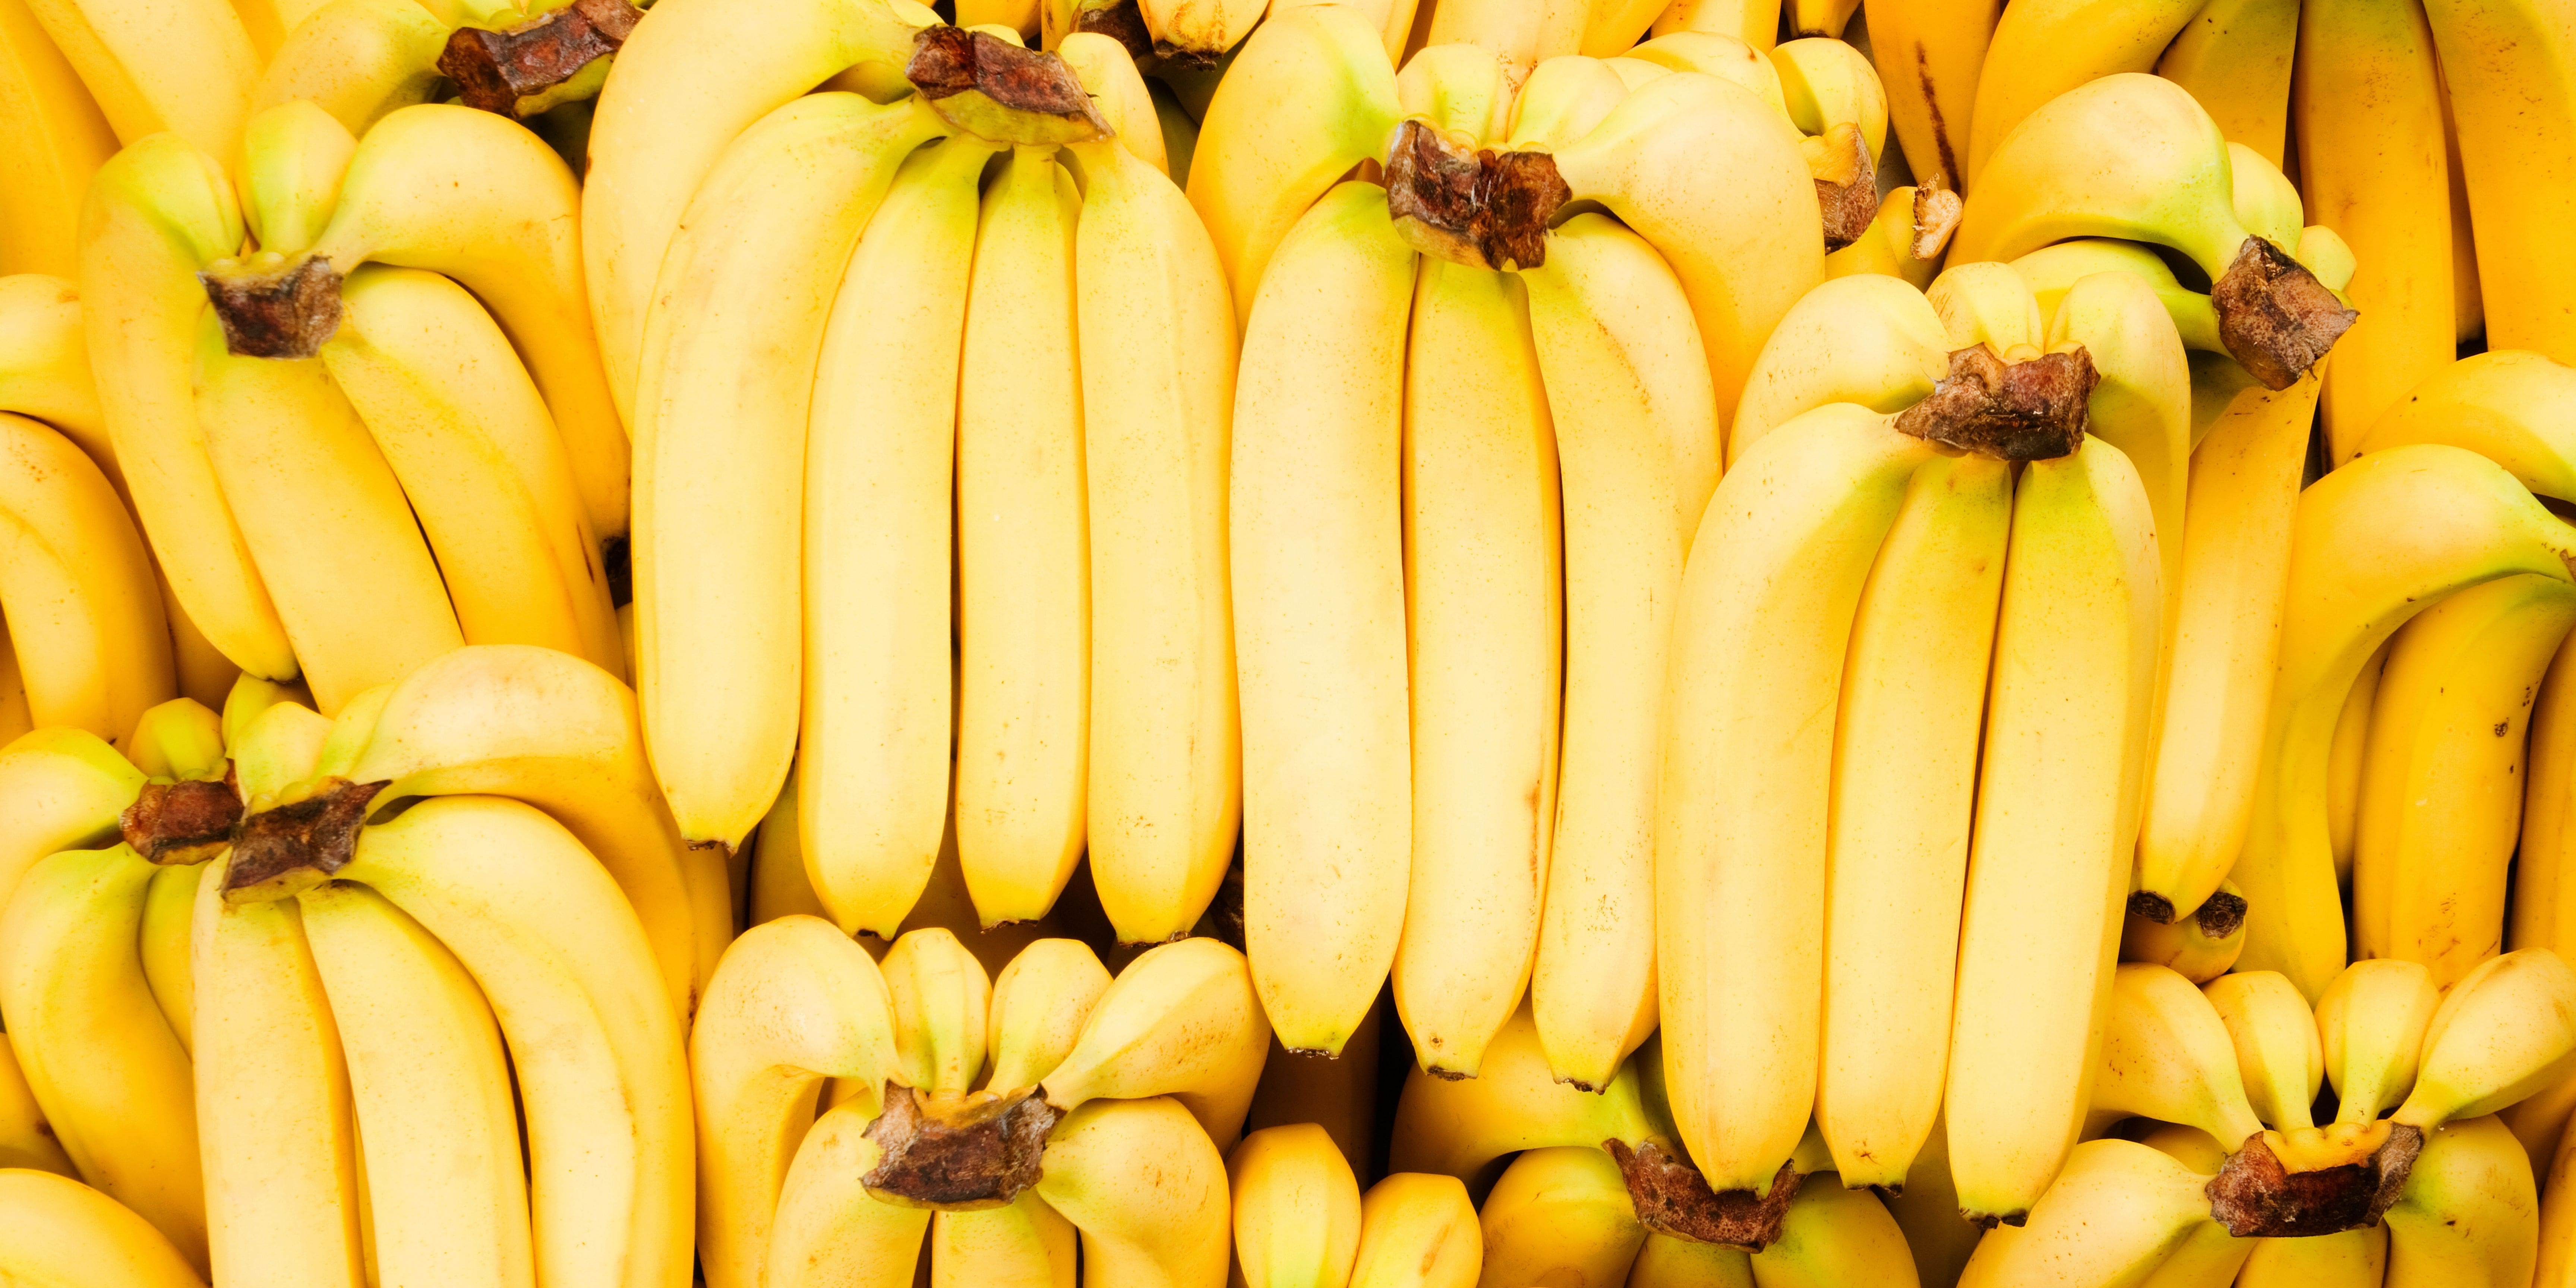 Fresh Bananas being stored